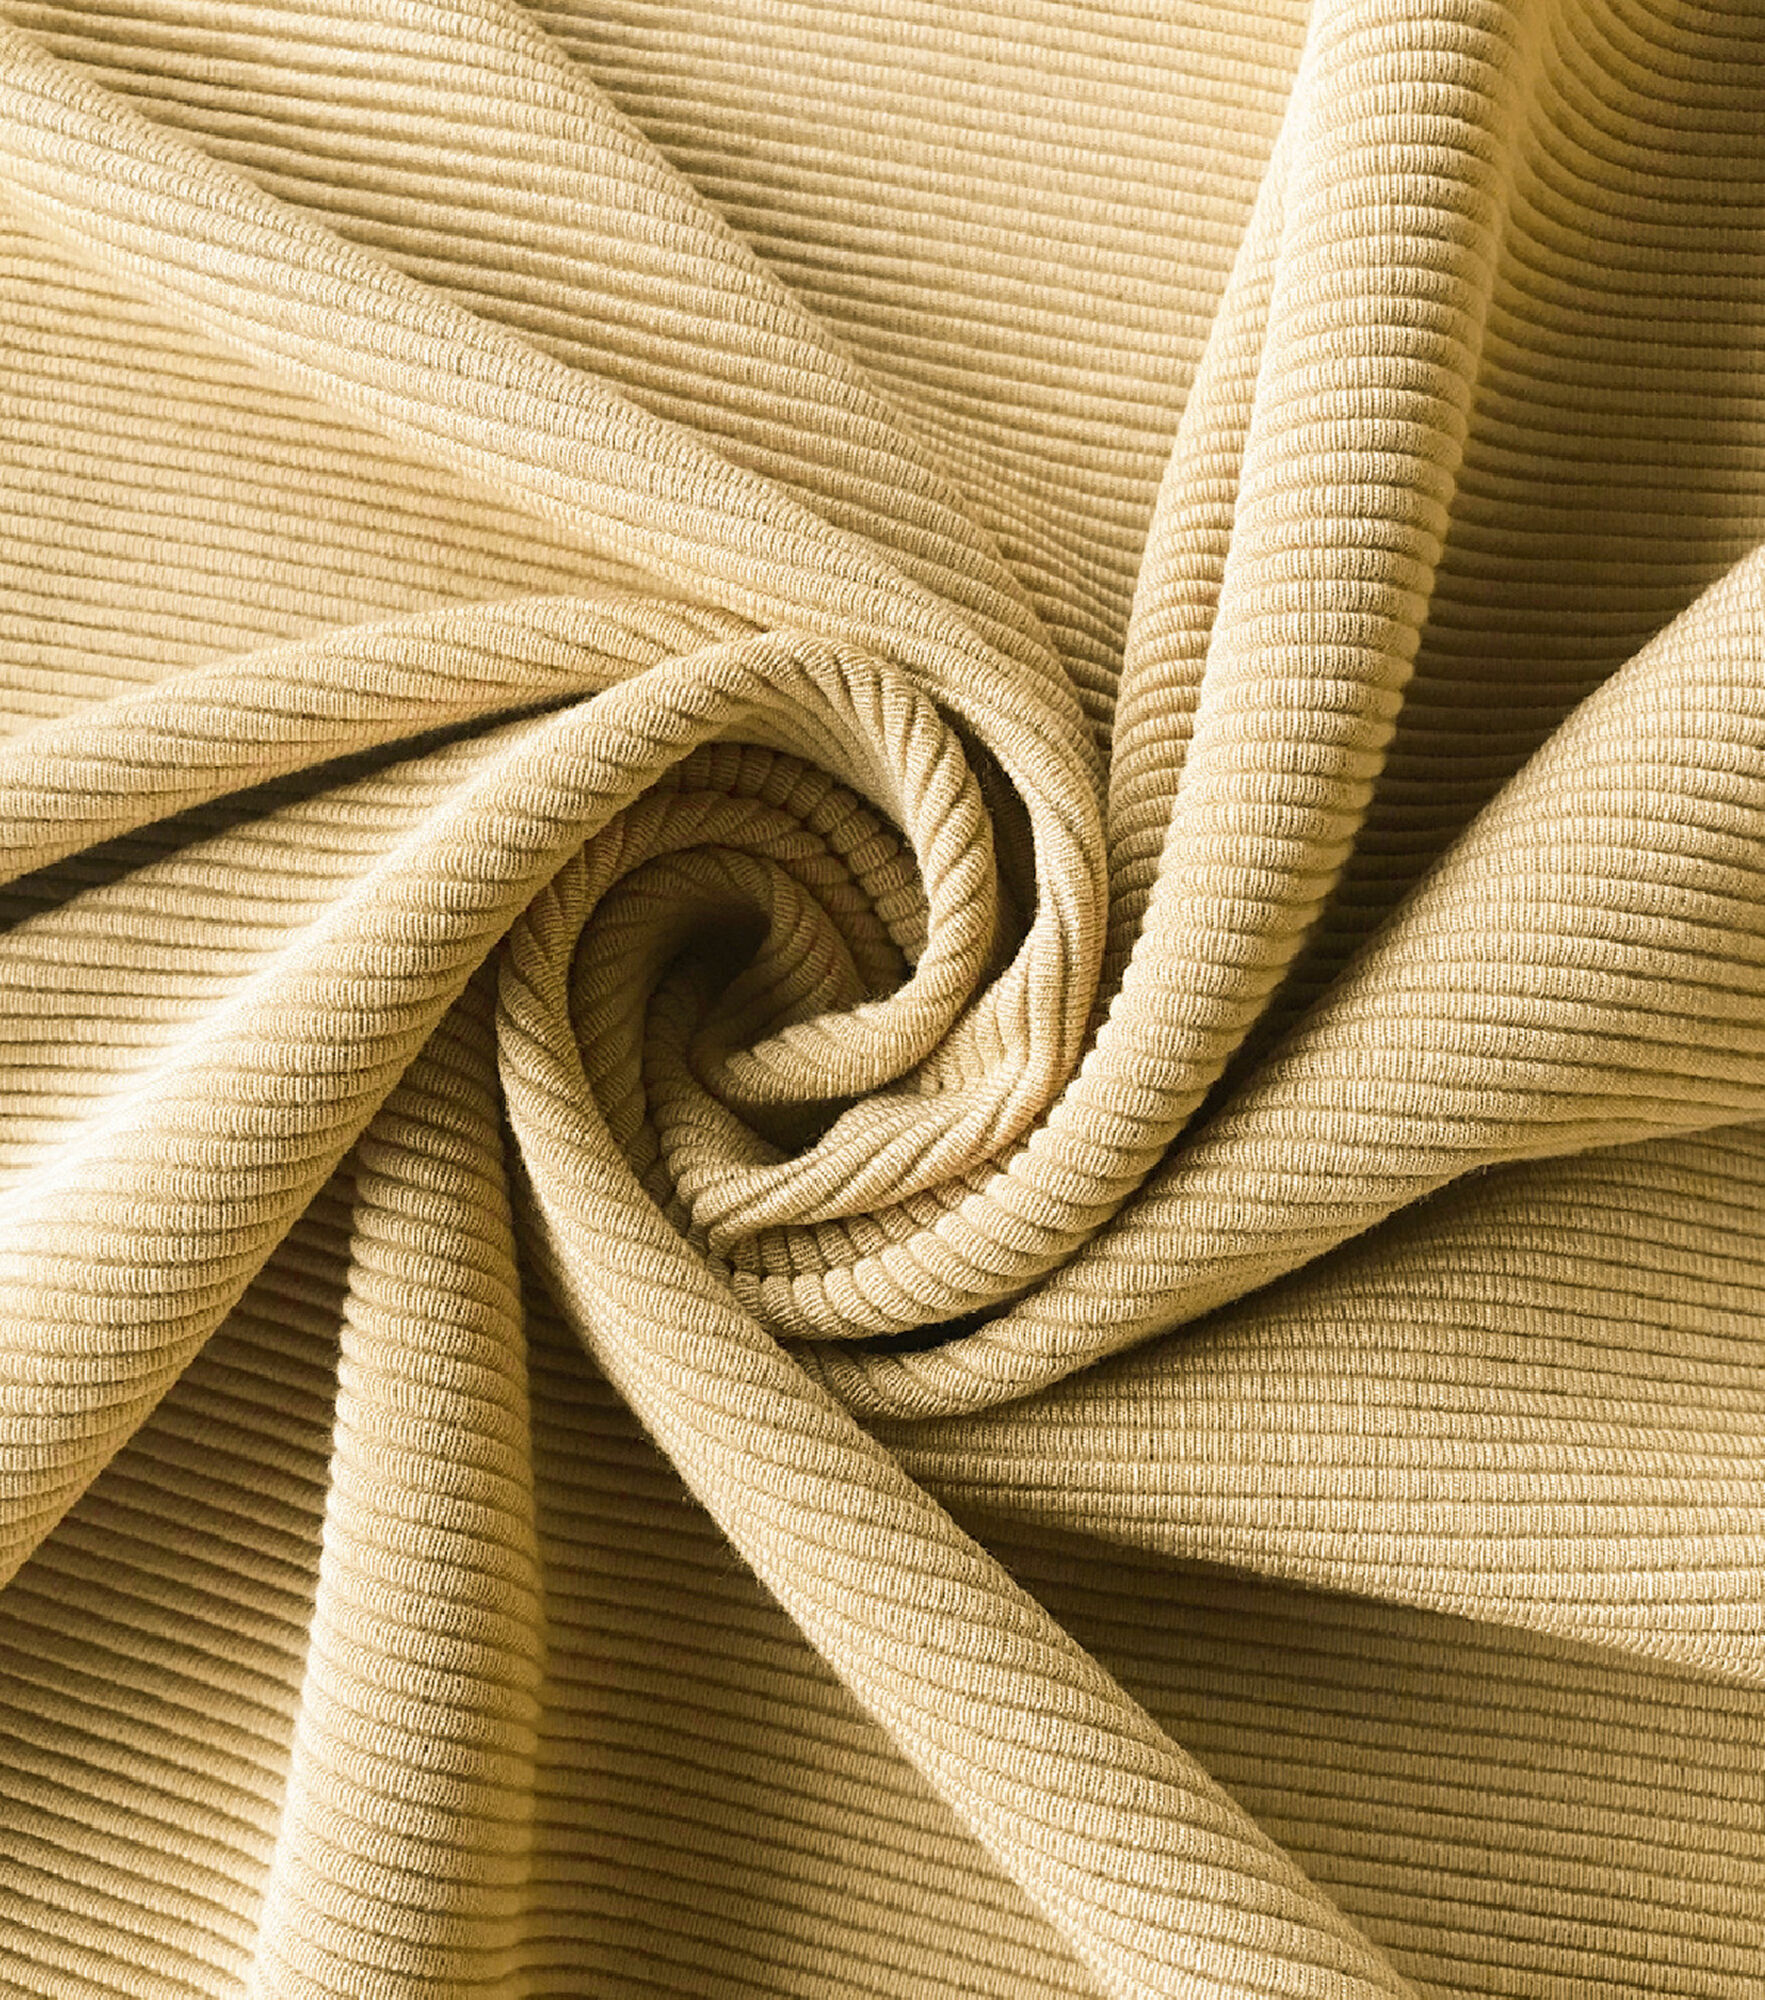 Rib Knit 2x2 Fabric White